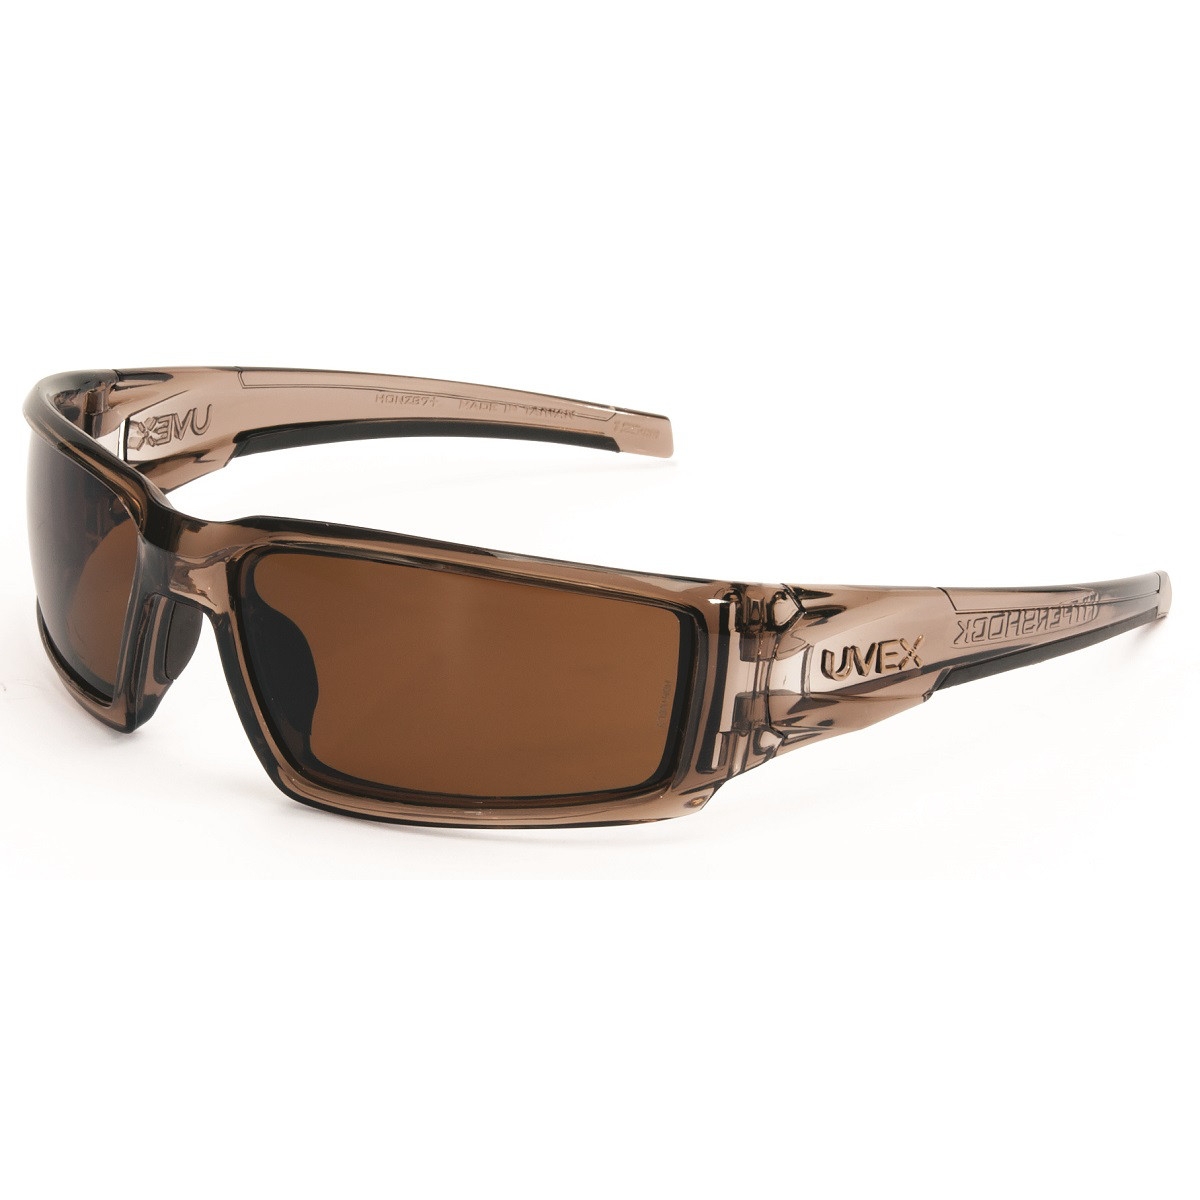 Uvex S2969 Hypershock Safety Glasses Smoke Brown Frame Espresso Polarized Lens